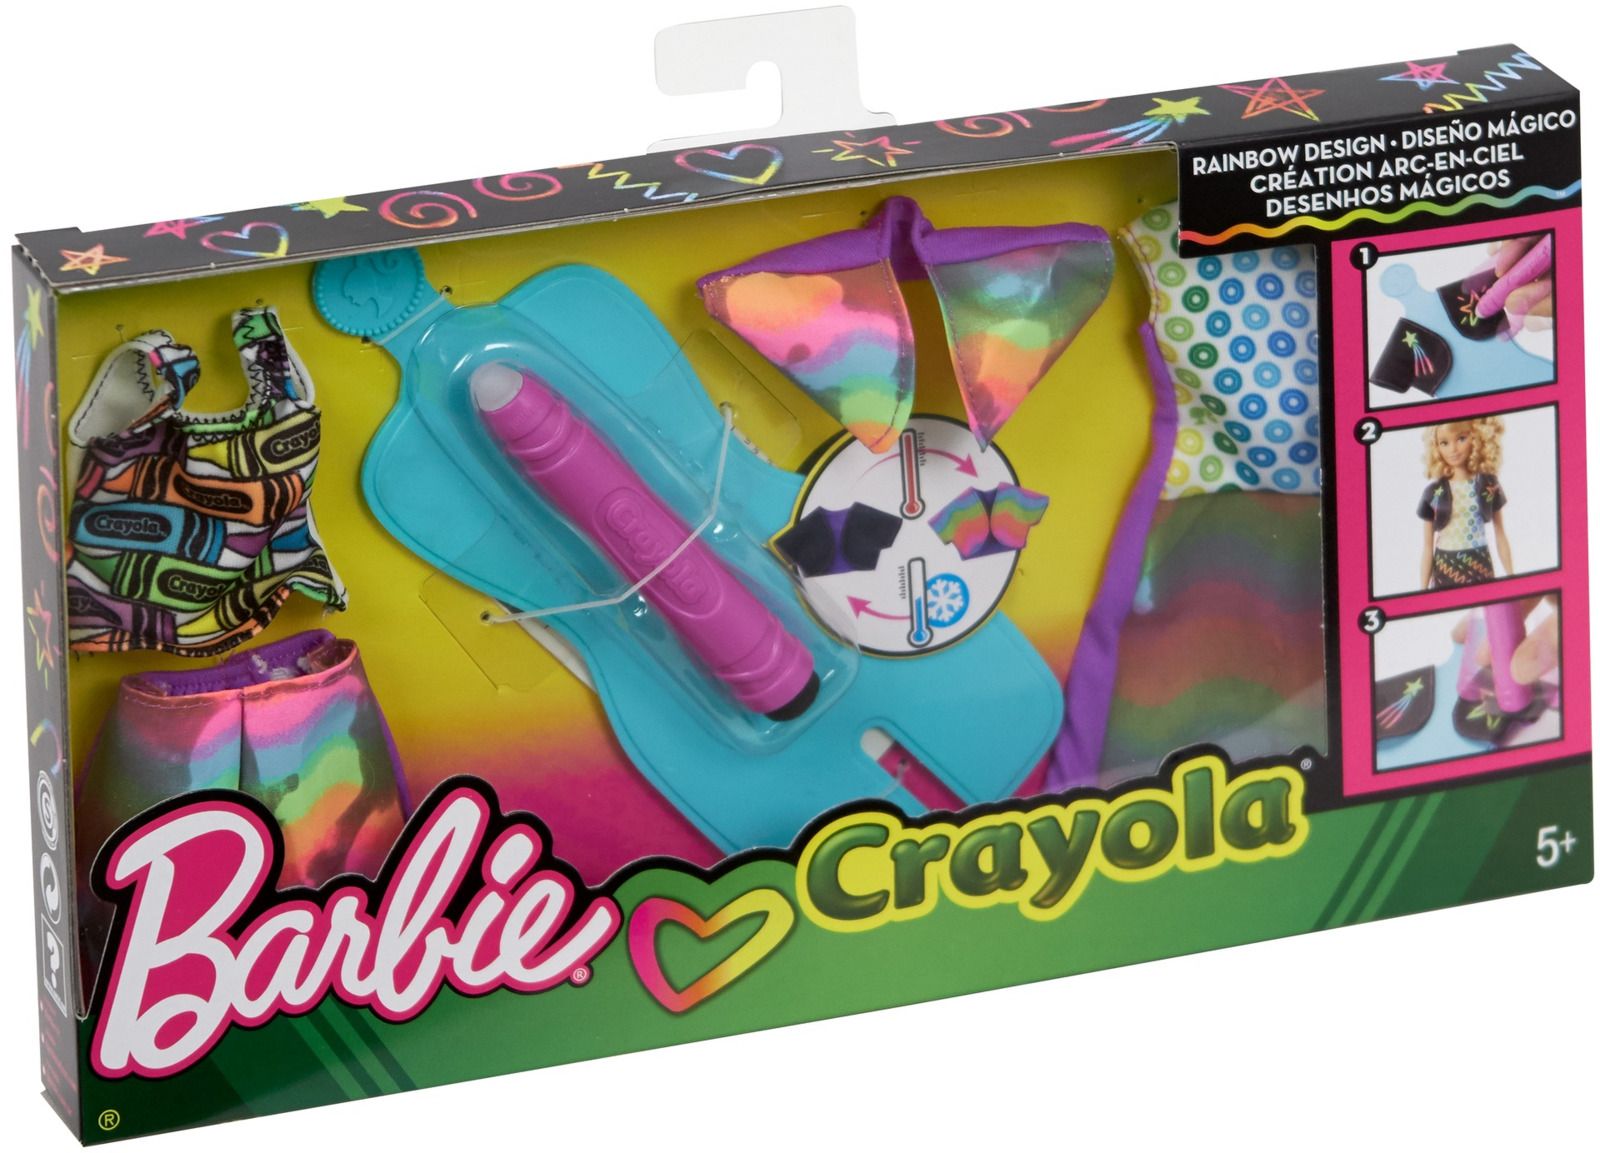 Barbie   Crayola     